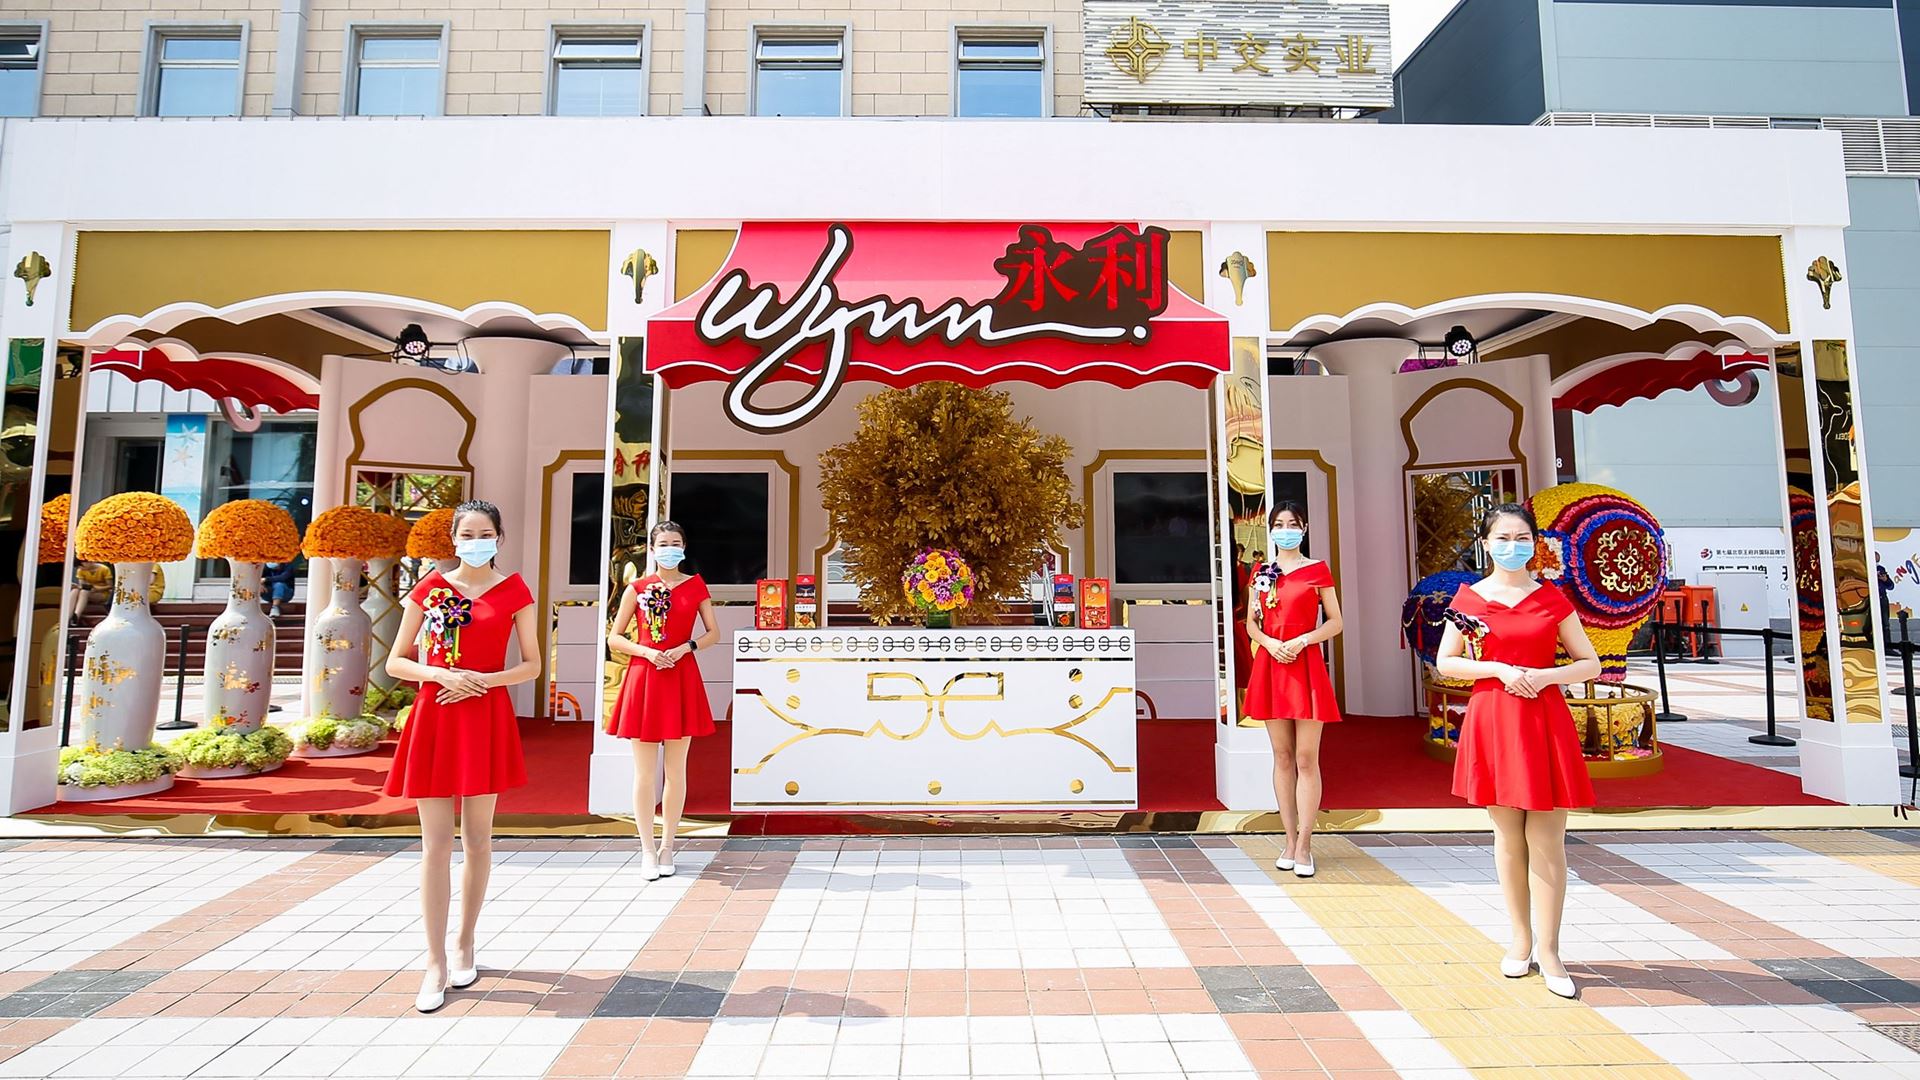 Wynn participates in "Beijing Macao Week" roadshow to boost Macau tourism.